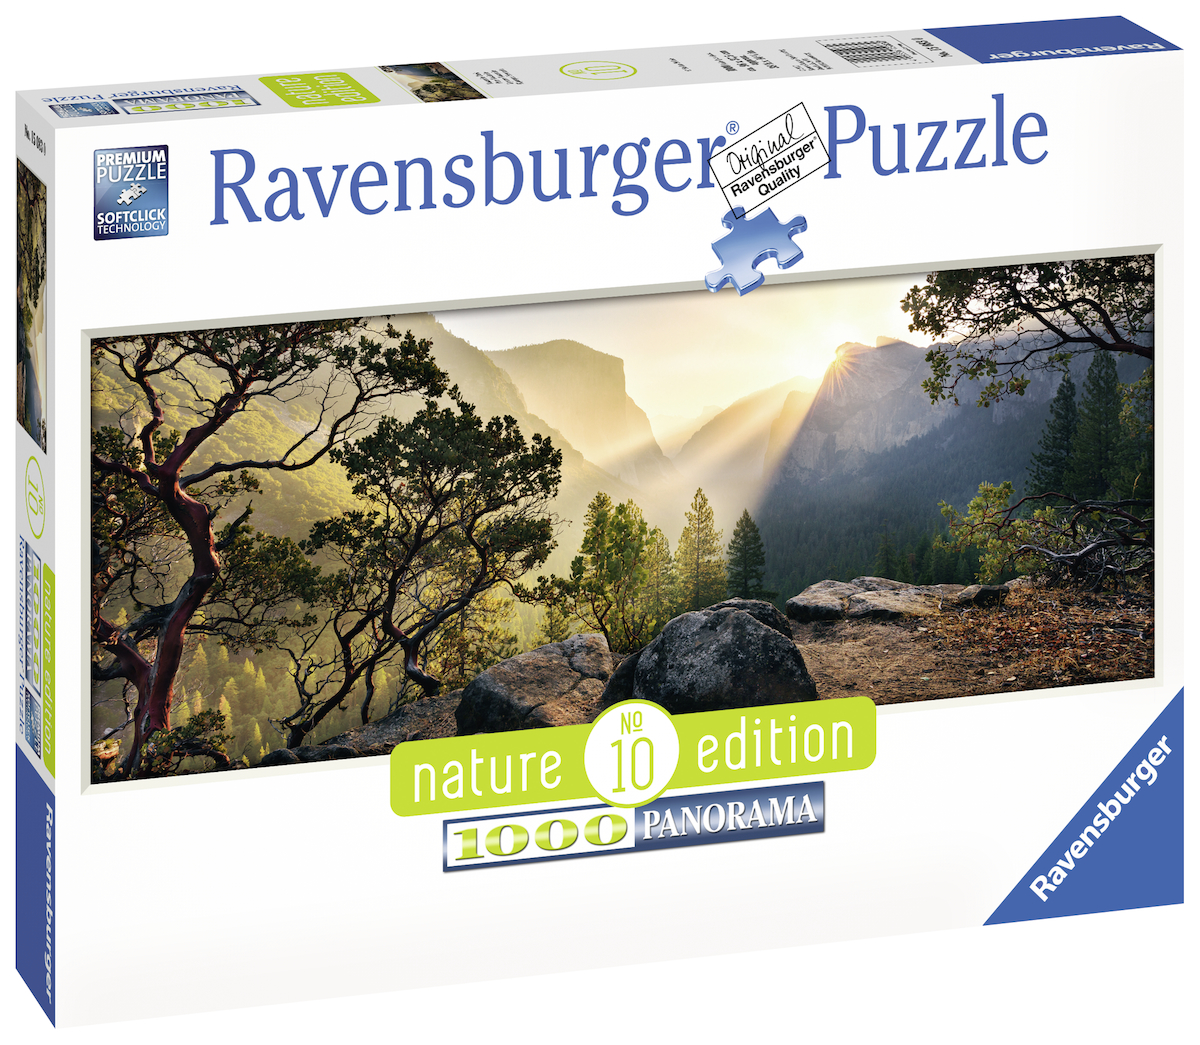 RAVENSBURGER Yosemite Park Puzzle Mehrfarbig